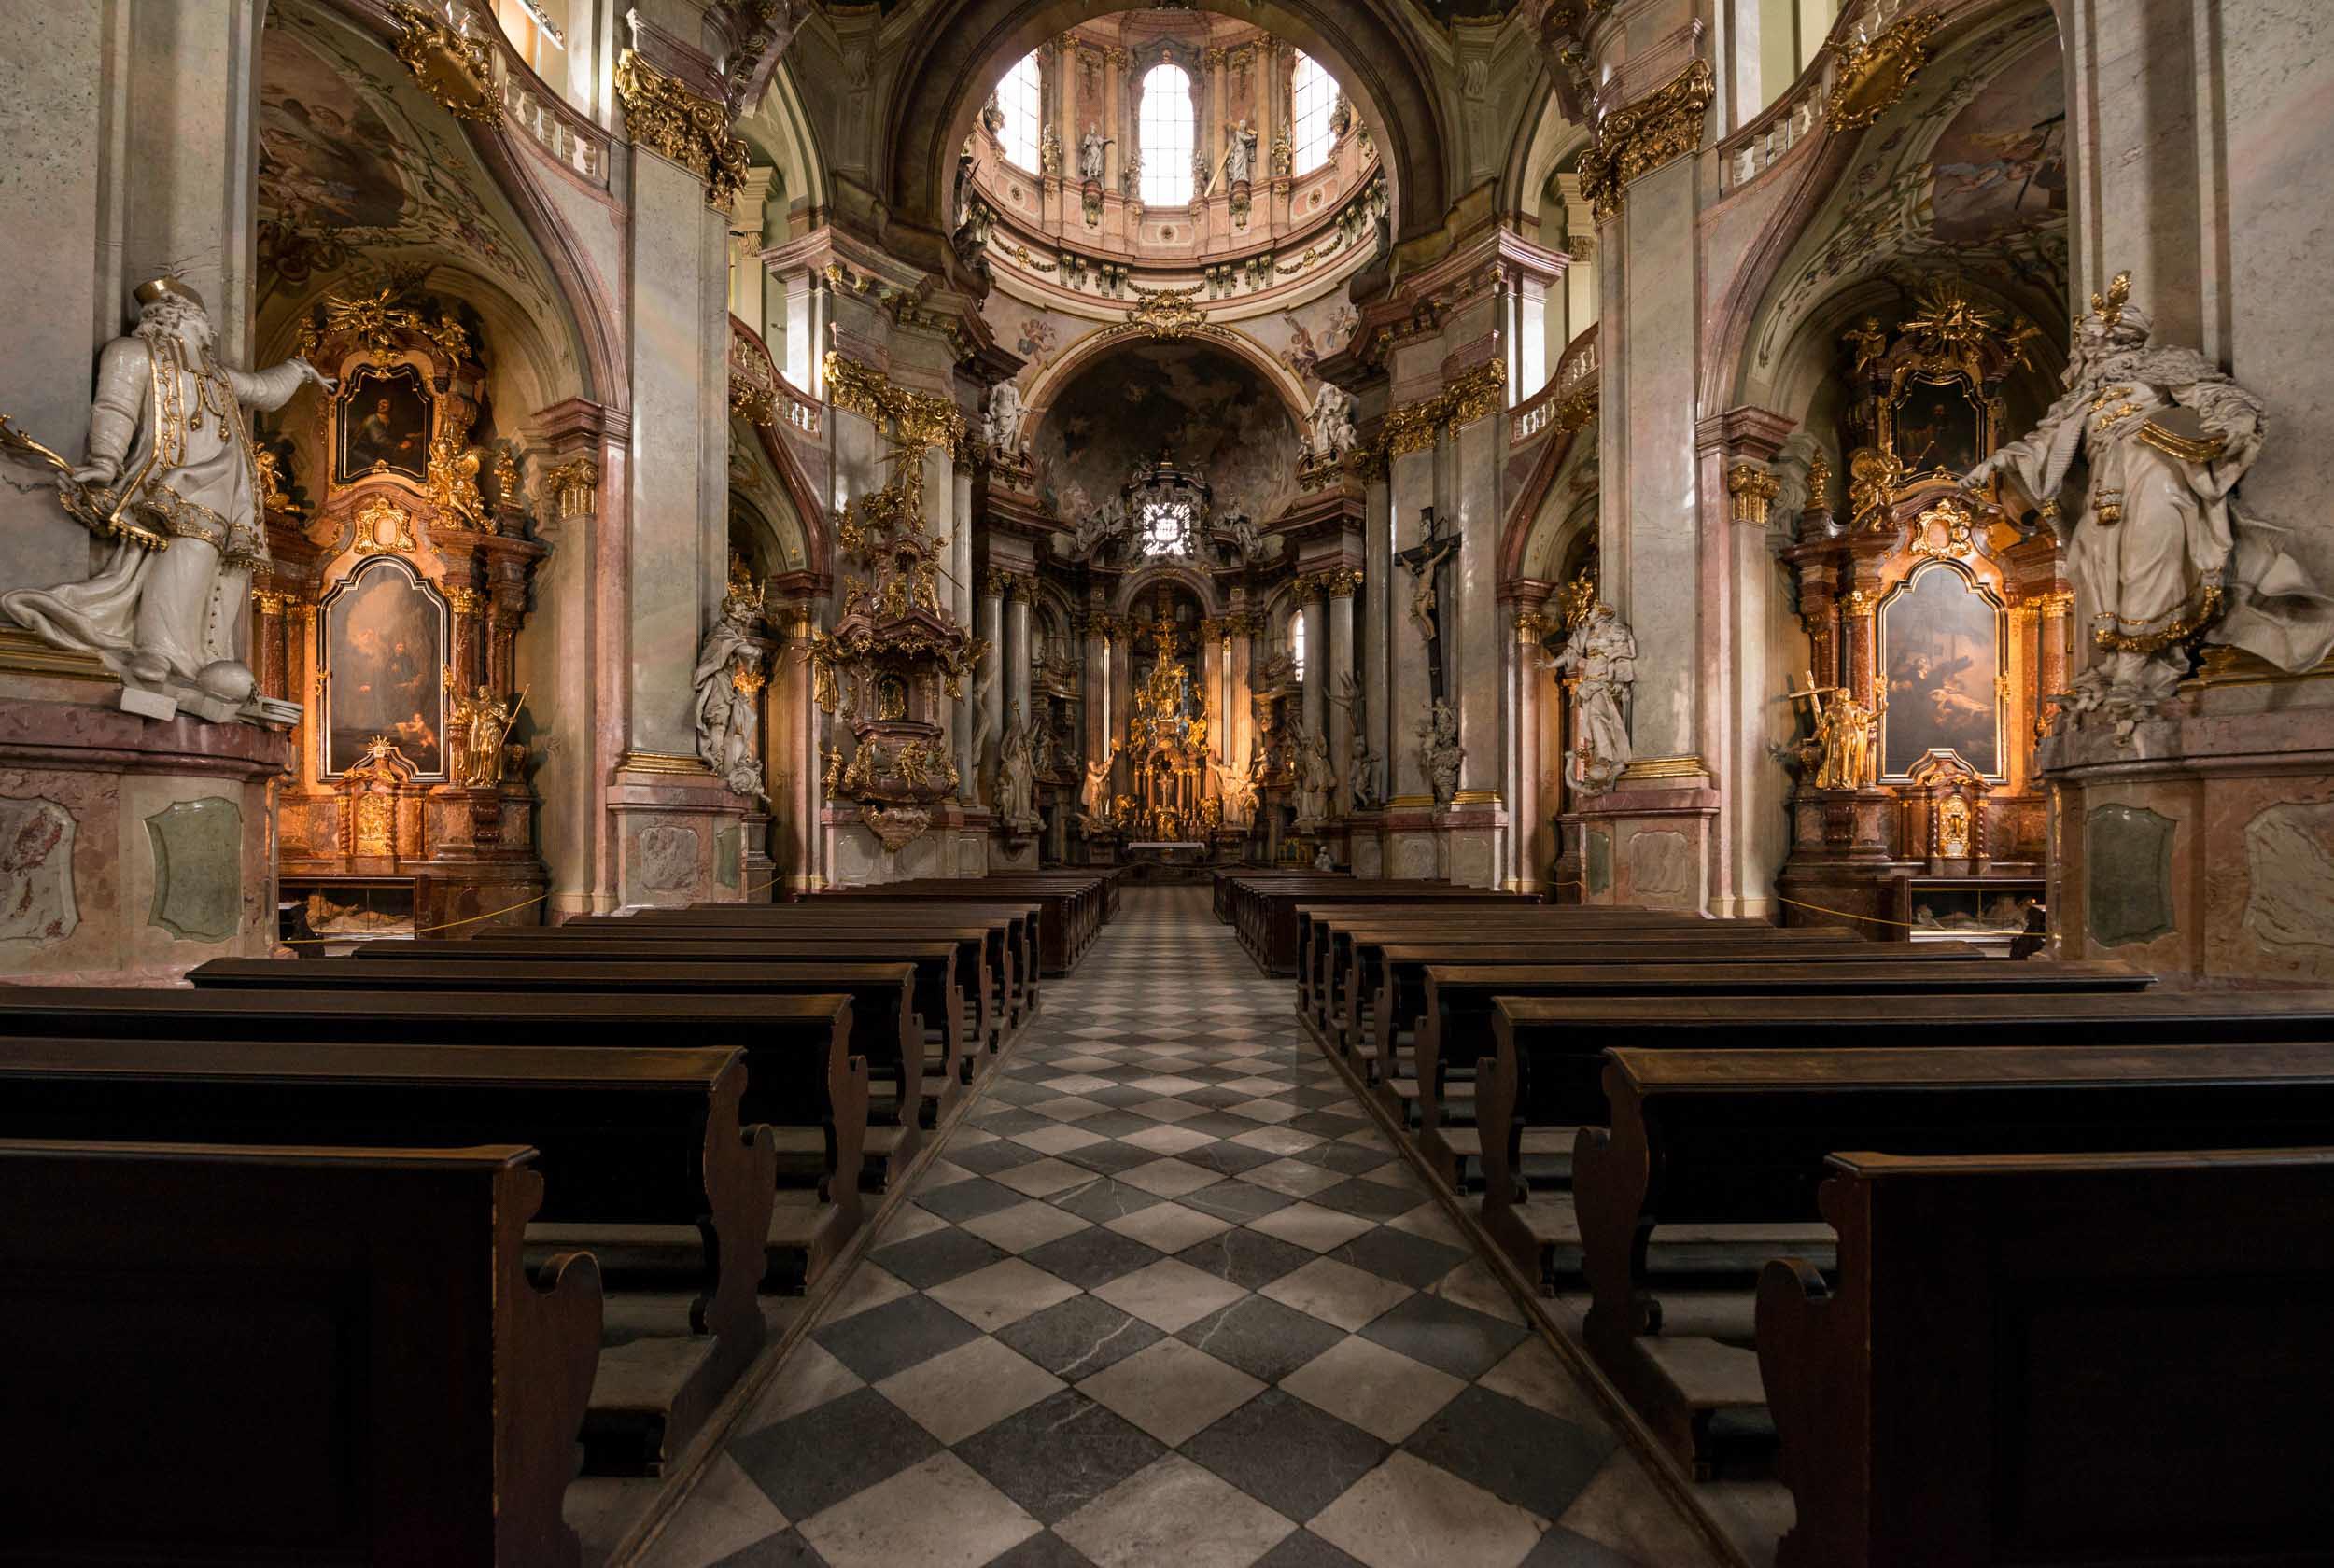 nicholas-church-interior-prague-czech-republic-architecture